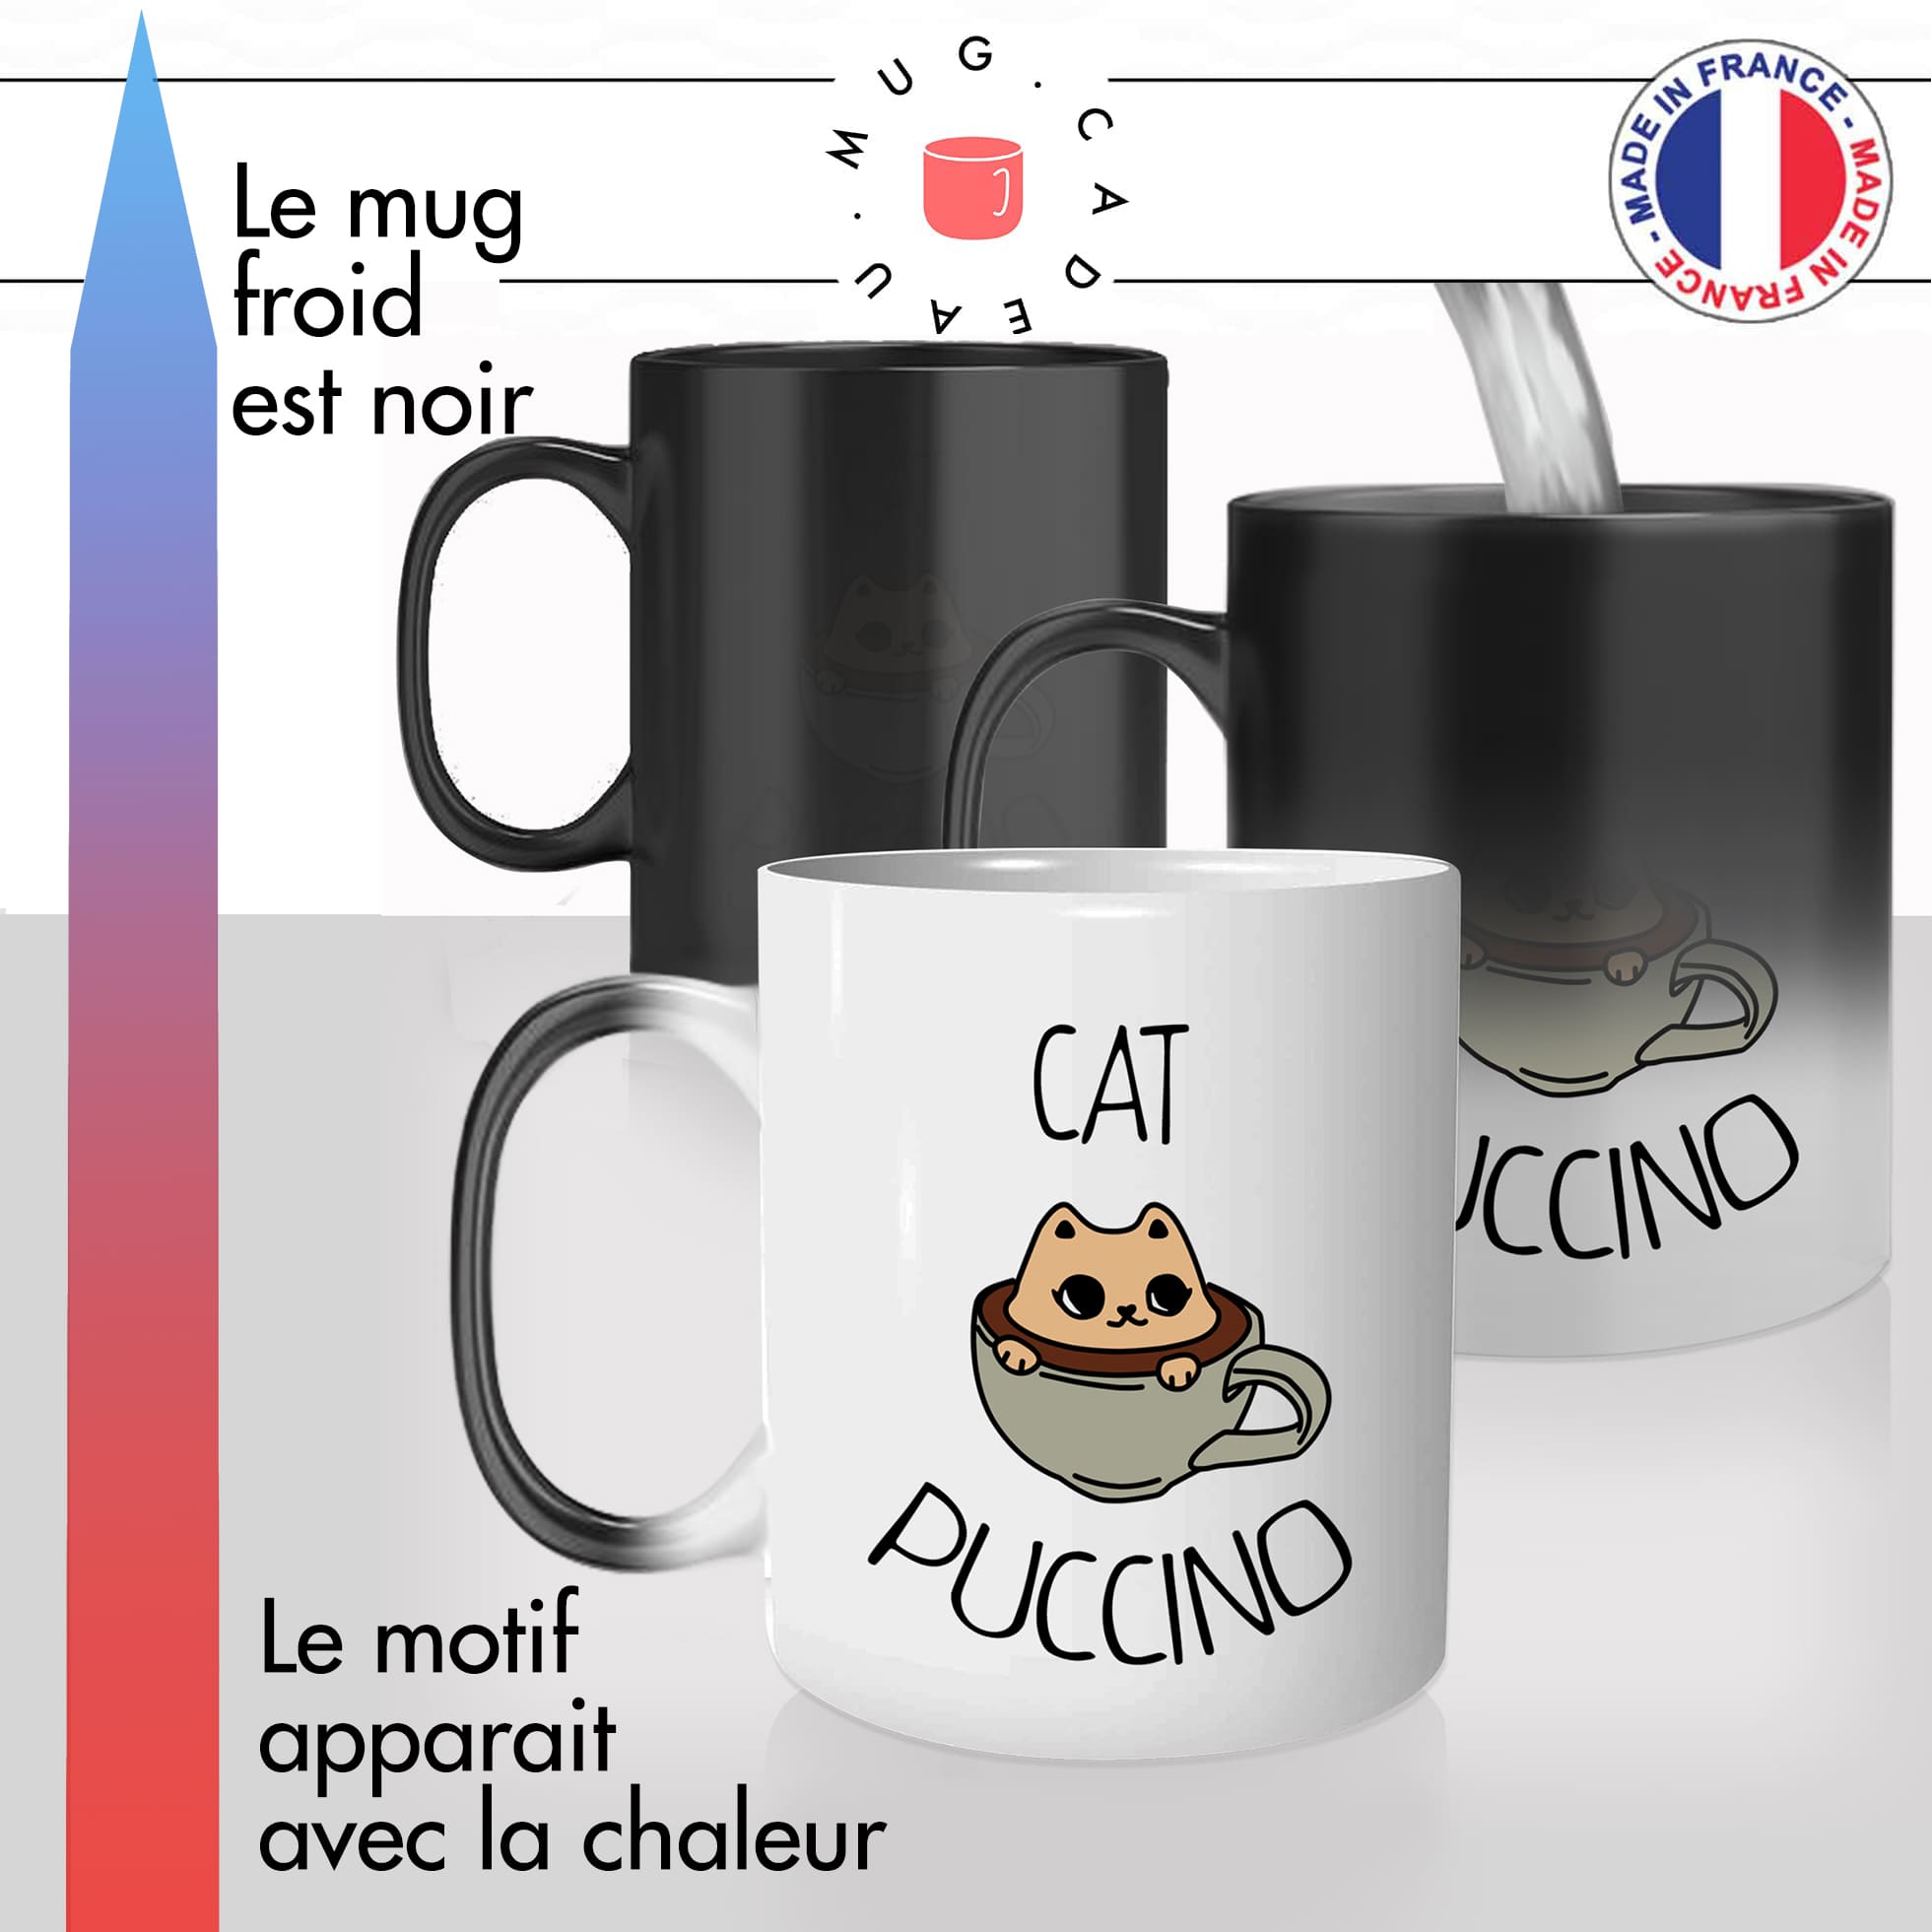 mug magique maman cat puccino capuccino café de chat chaton idée cadeau tasse thermochauffante thermo reactif surprise